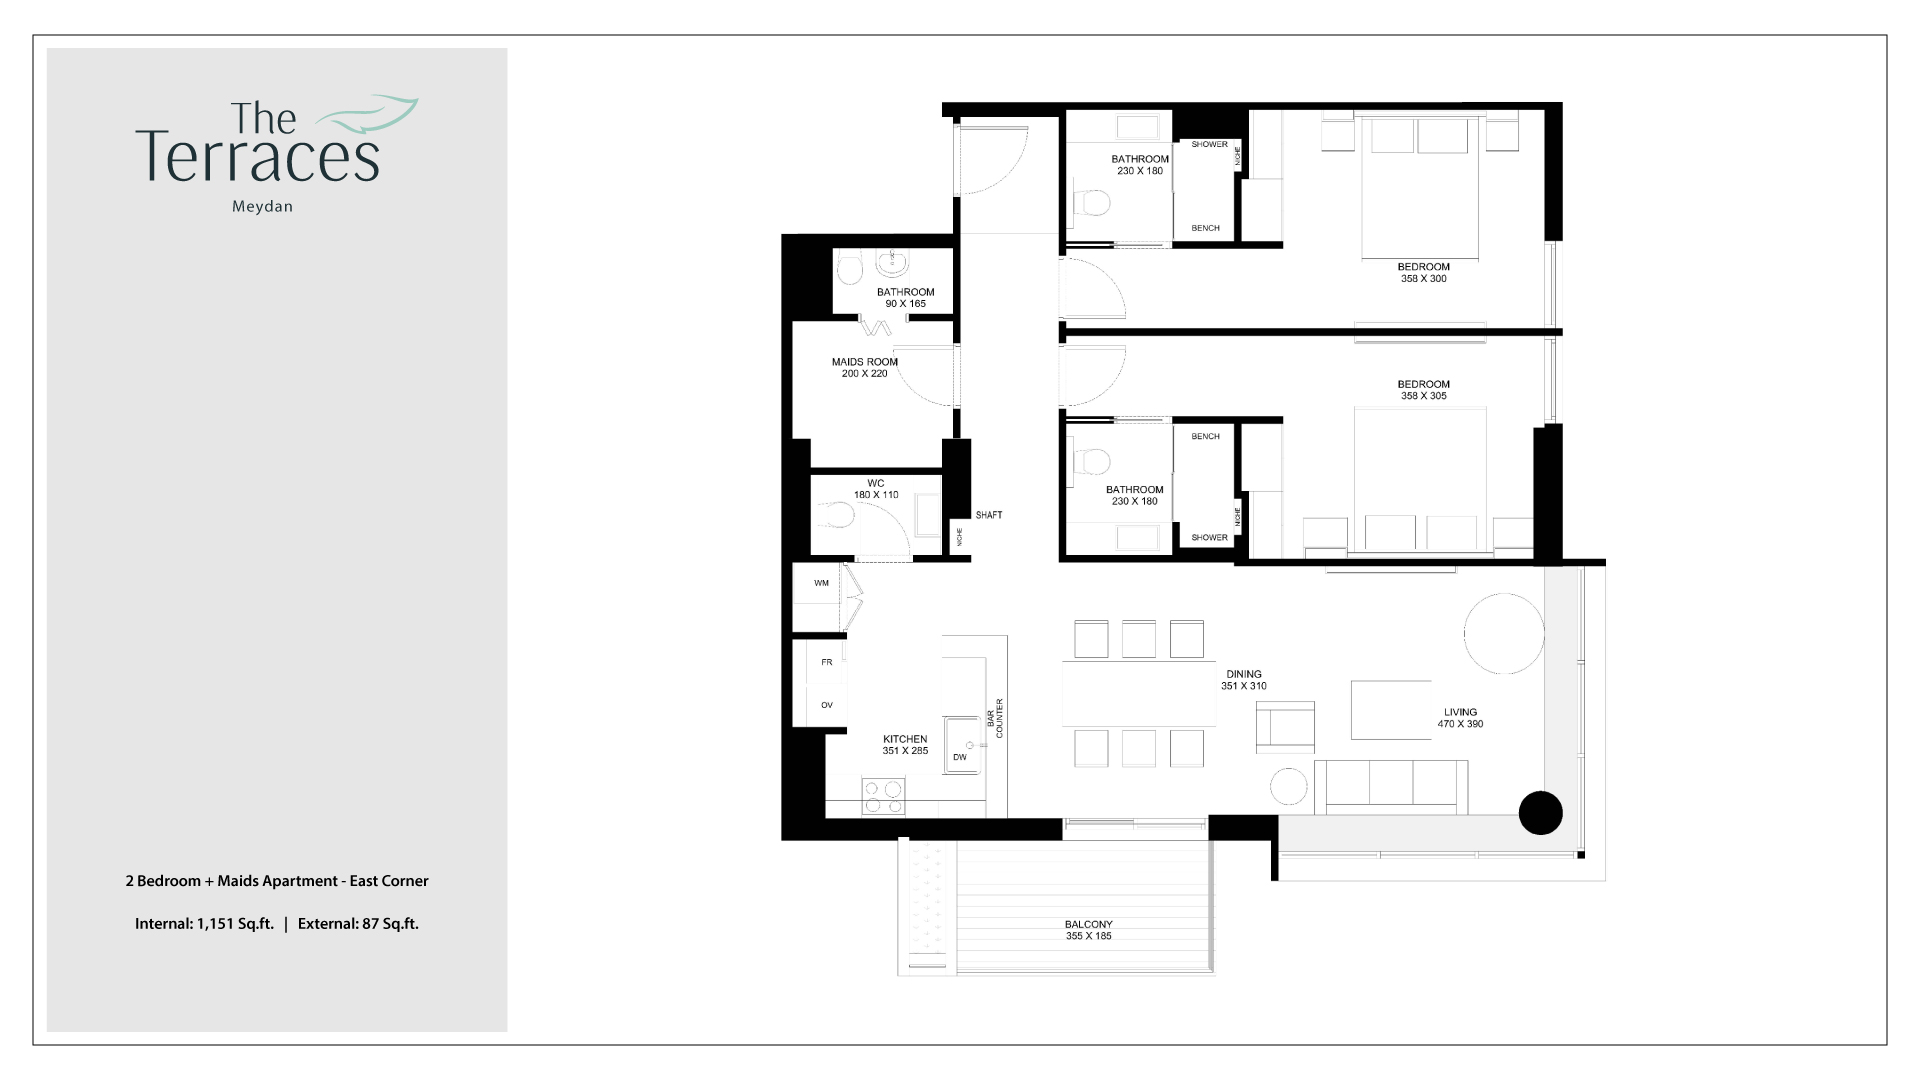 The Terraces 2 Bedroom + Maid Apartment East Corner Floor Plan